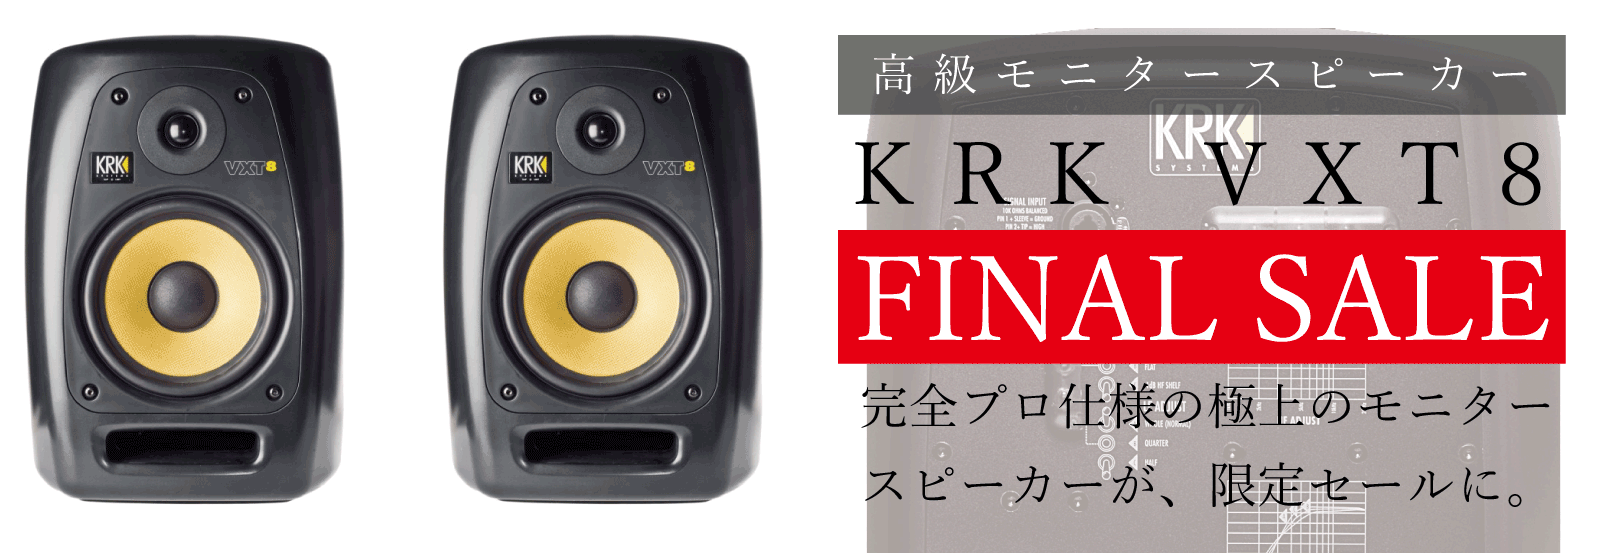 KRK VXT8 スタジオスピーカー、ペア スピーカー オーディオ機器 家電・スマホ・カメラ 【2016 新作】